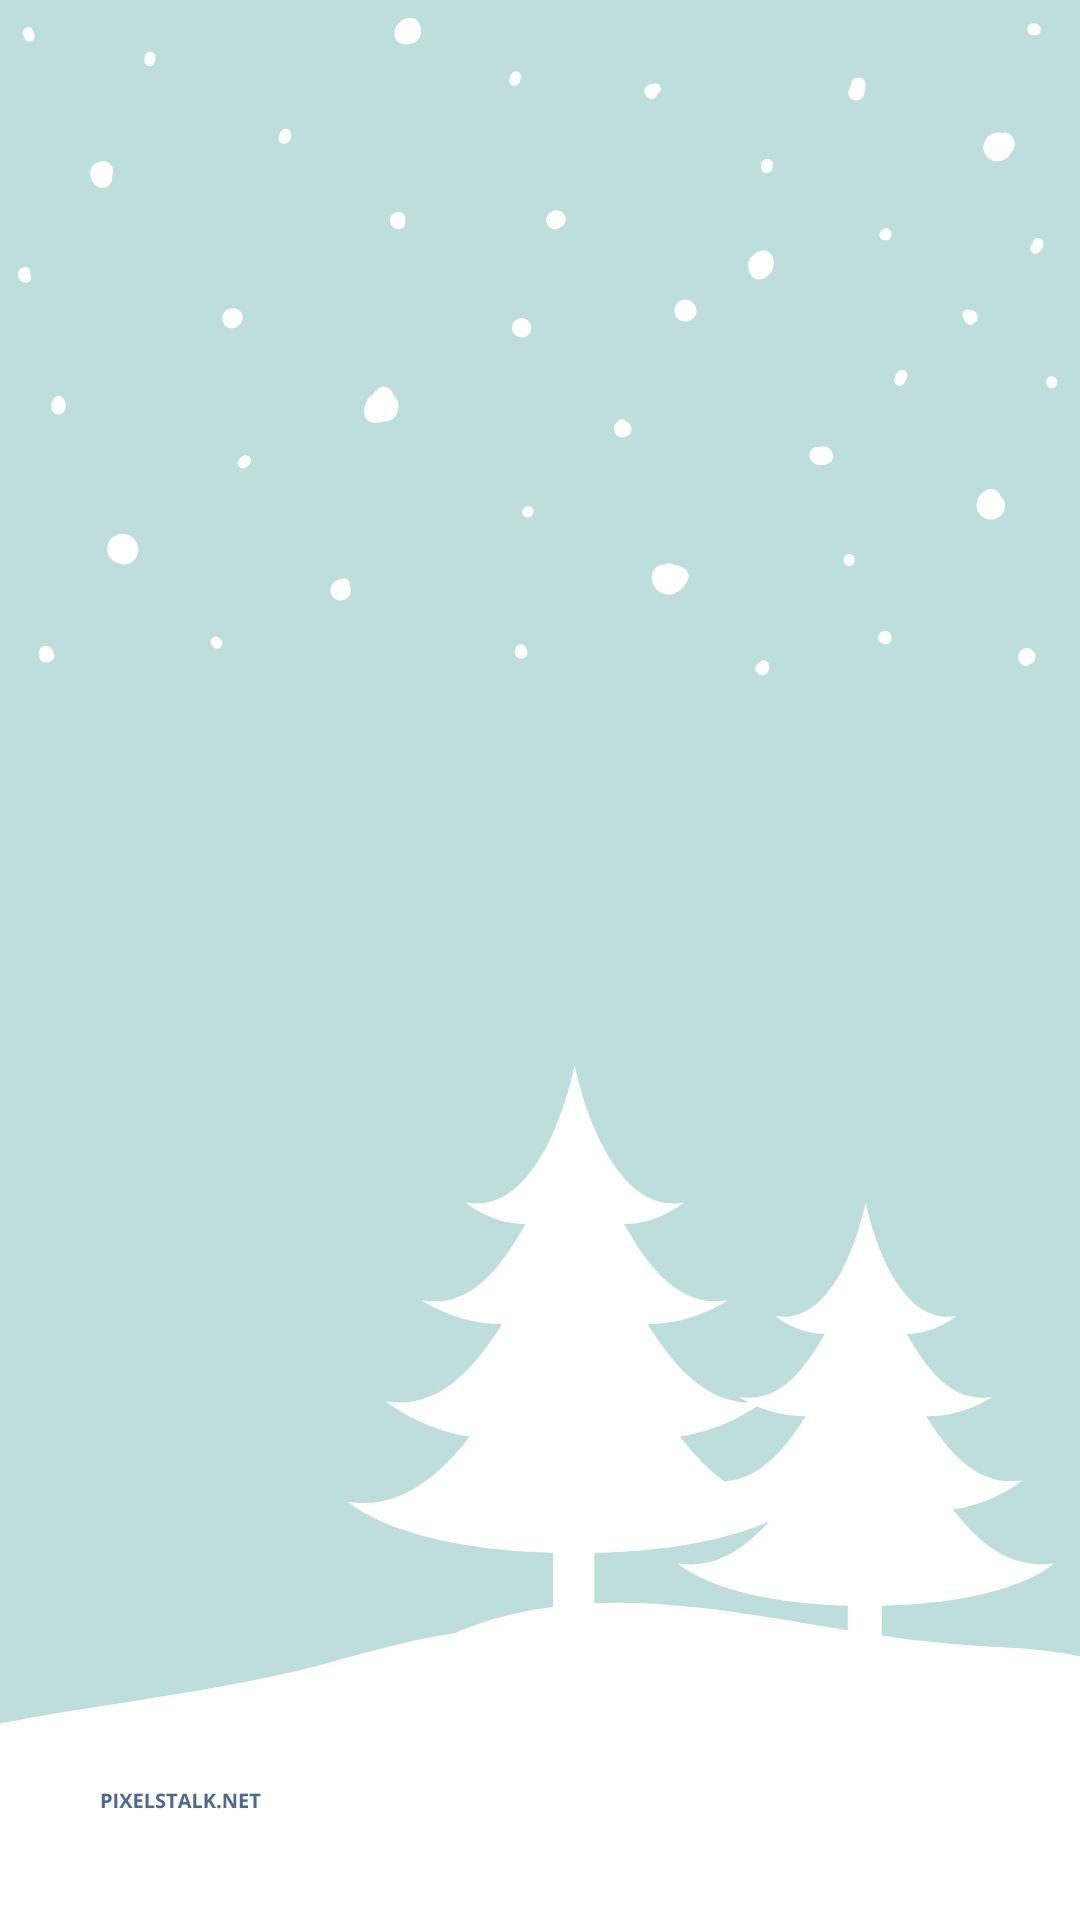 Cute Winter Wallpapers - Top 35 Best Cute Winter Wallpapers Download